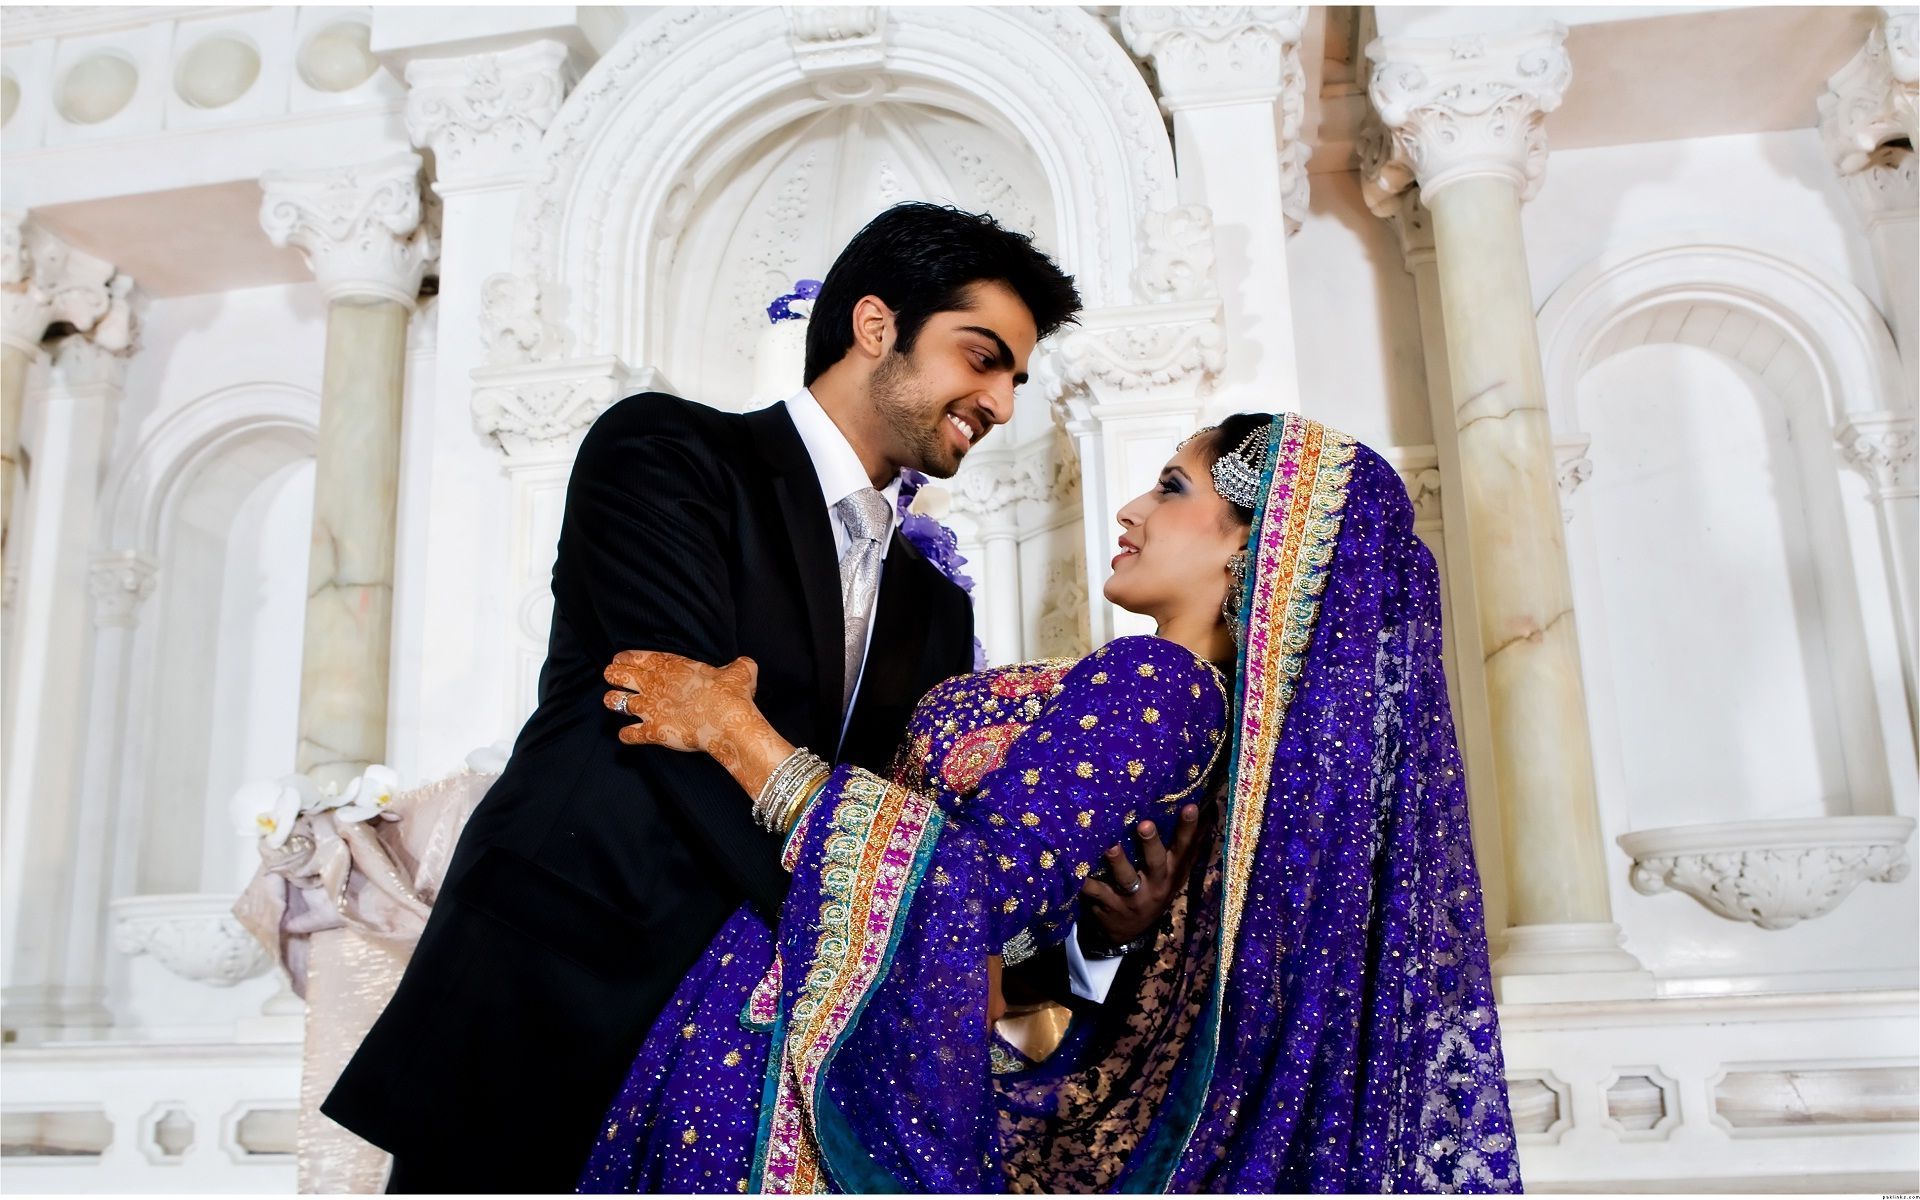 1514 Indian Cartoon Wedding Couple Images Stock Photos  Vectors   Shutterstock